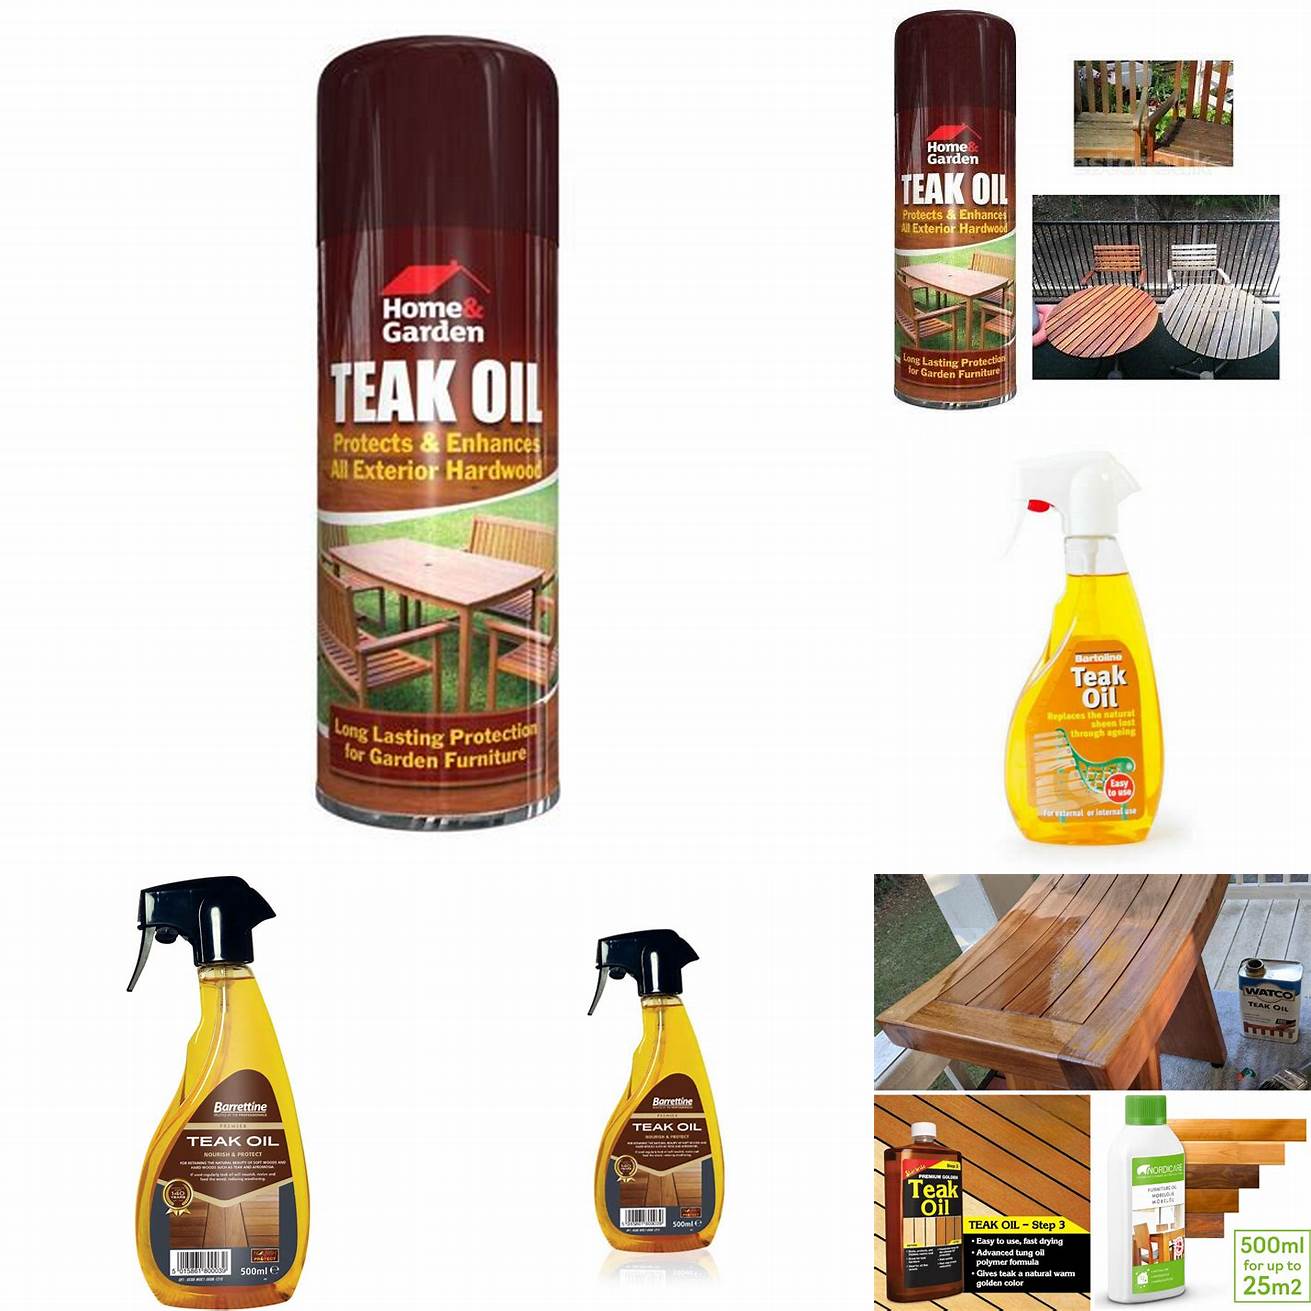 Teak oil spray in action